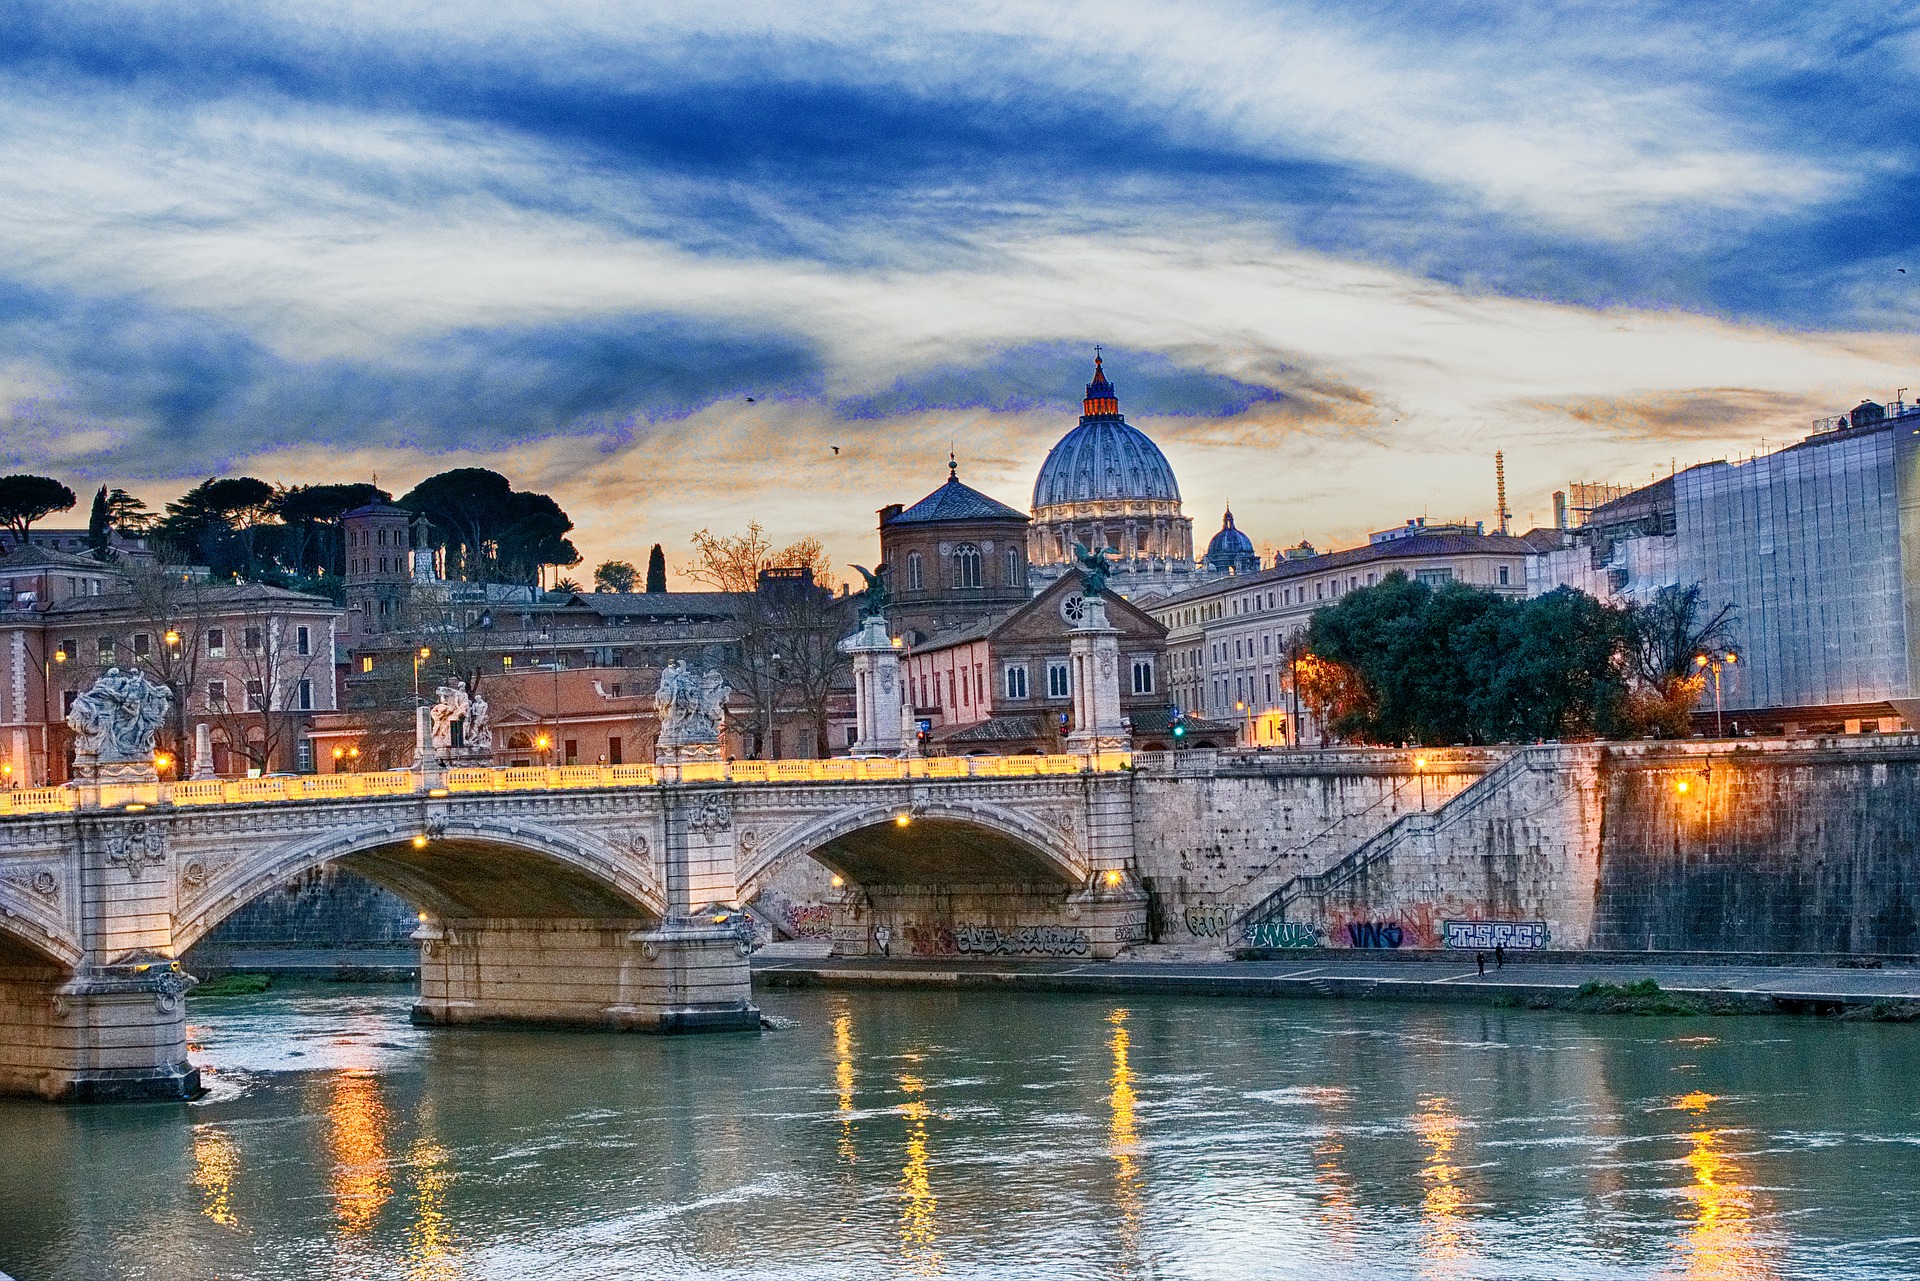 Güsntige Reise nach Rom im 4 Sterne Flaminio Village inklusive Flug ab 95,25€